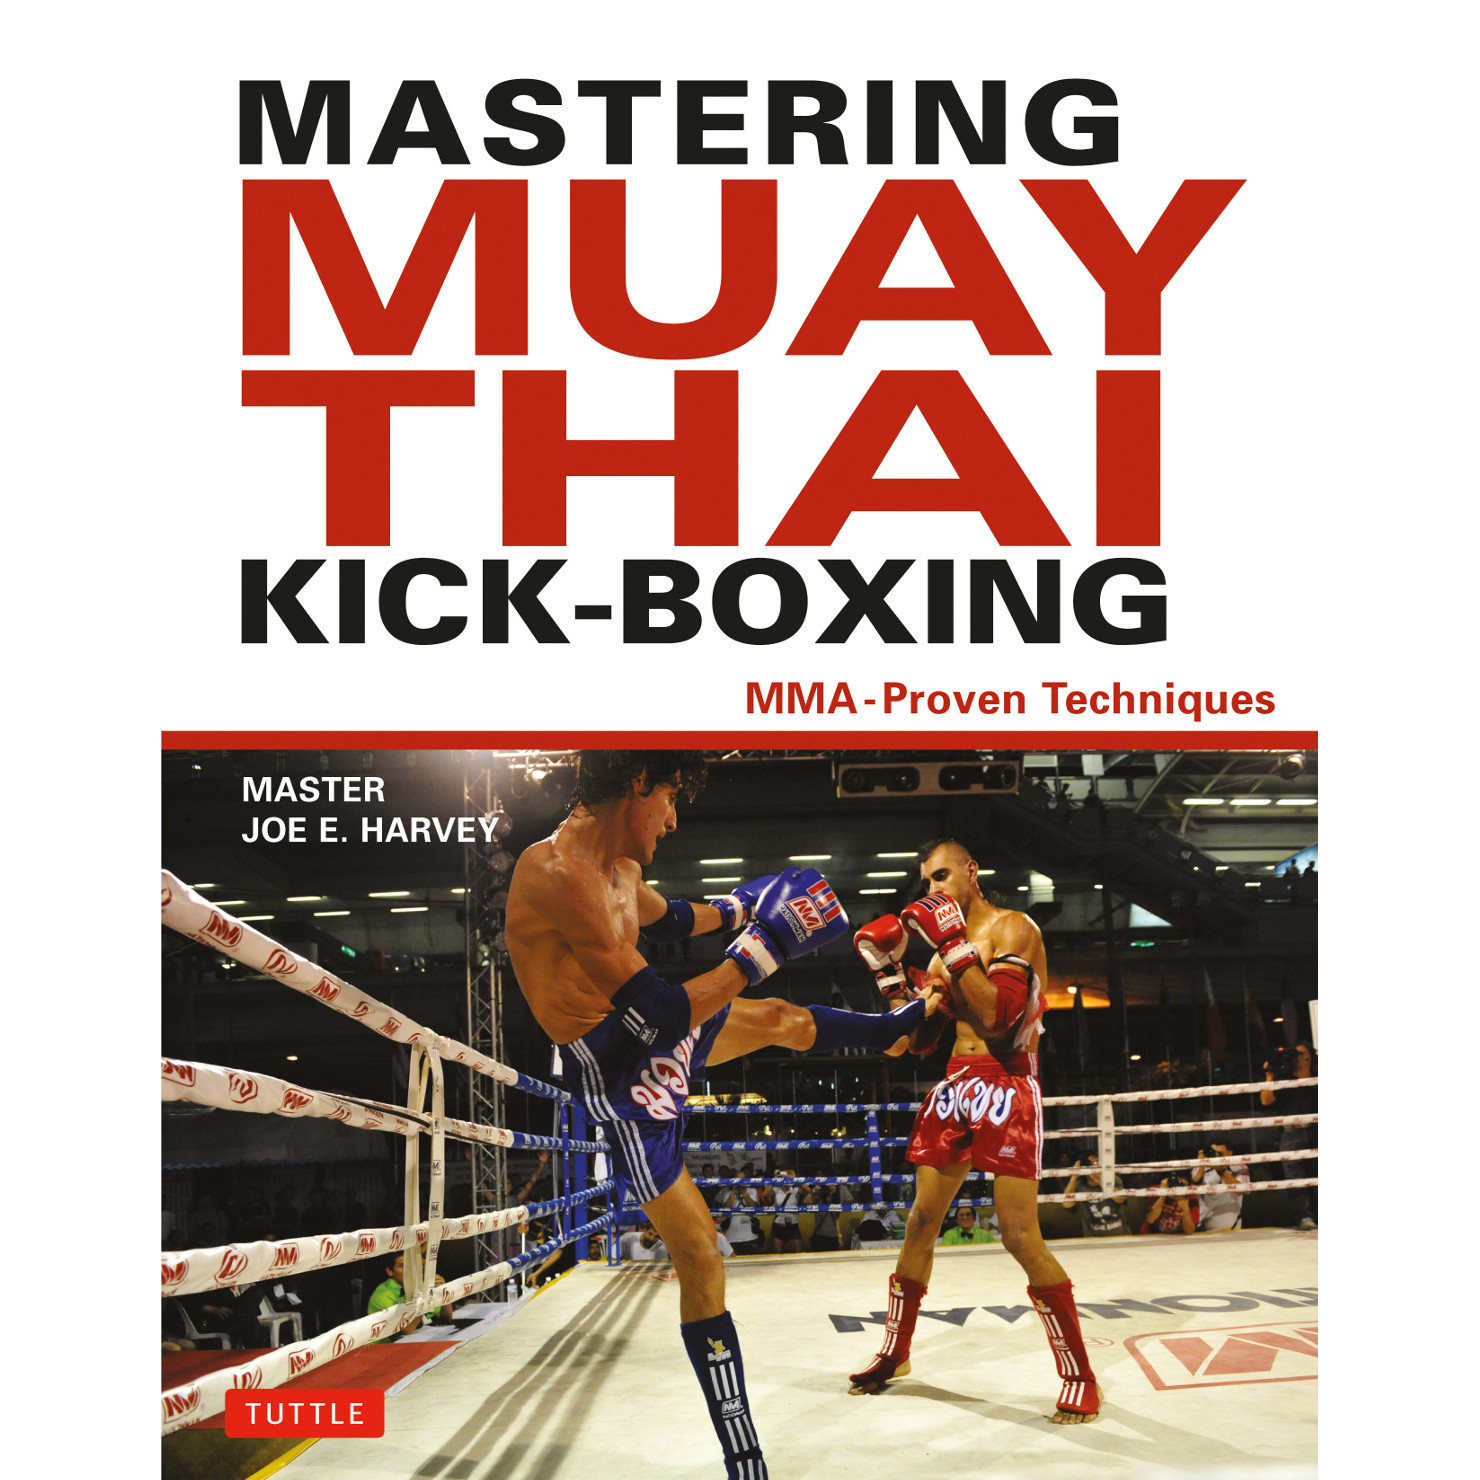 Protège-dents Star palace double - PROD - Boxe thaï / Kick Boxing - Homme -  Equipement de boxe, FreeFight, KravMaga en ligne - BoxingProFight